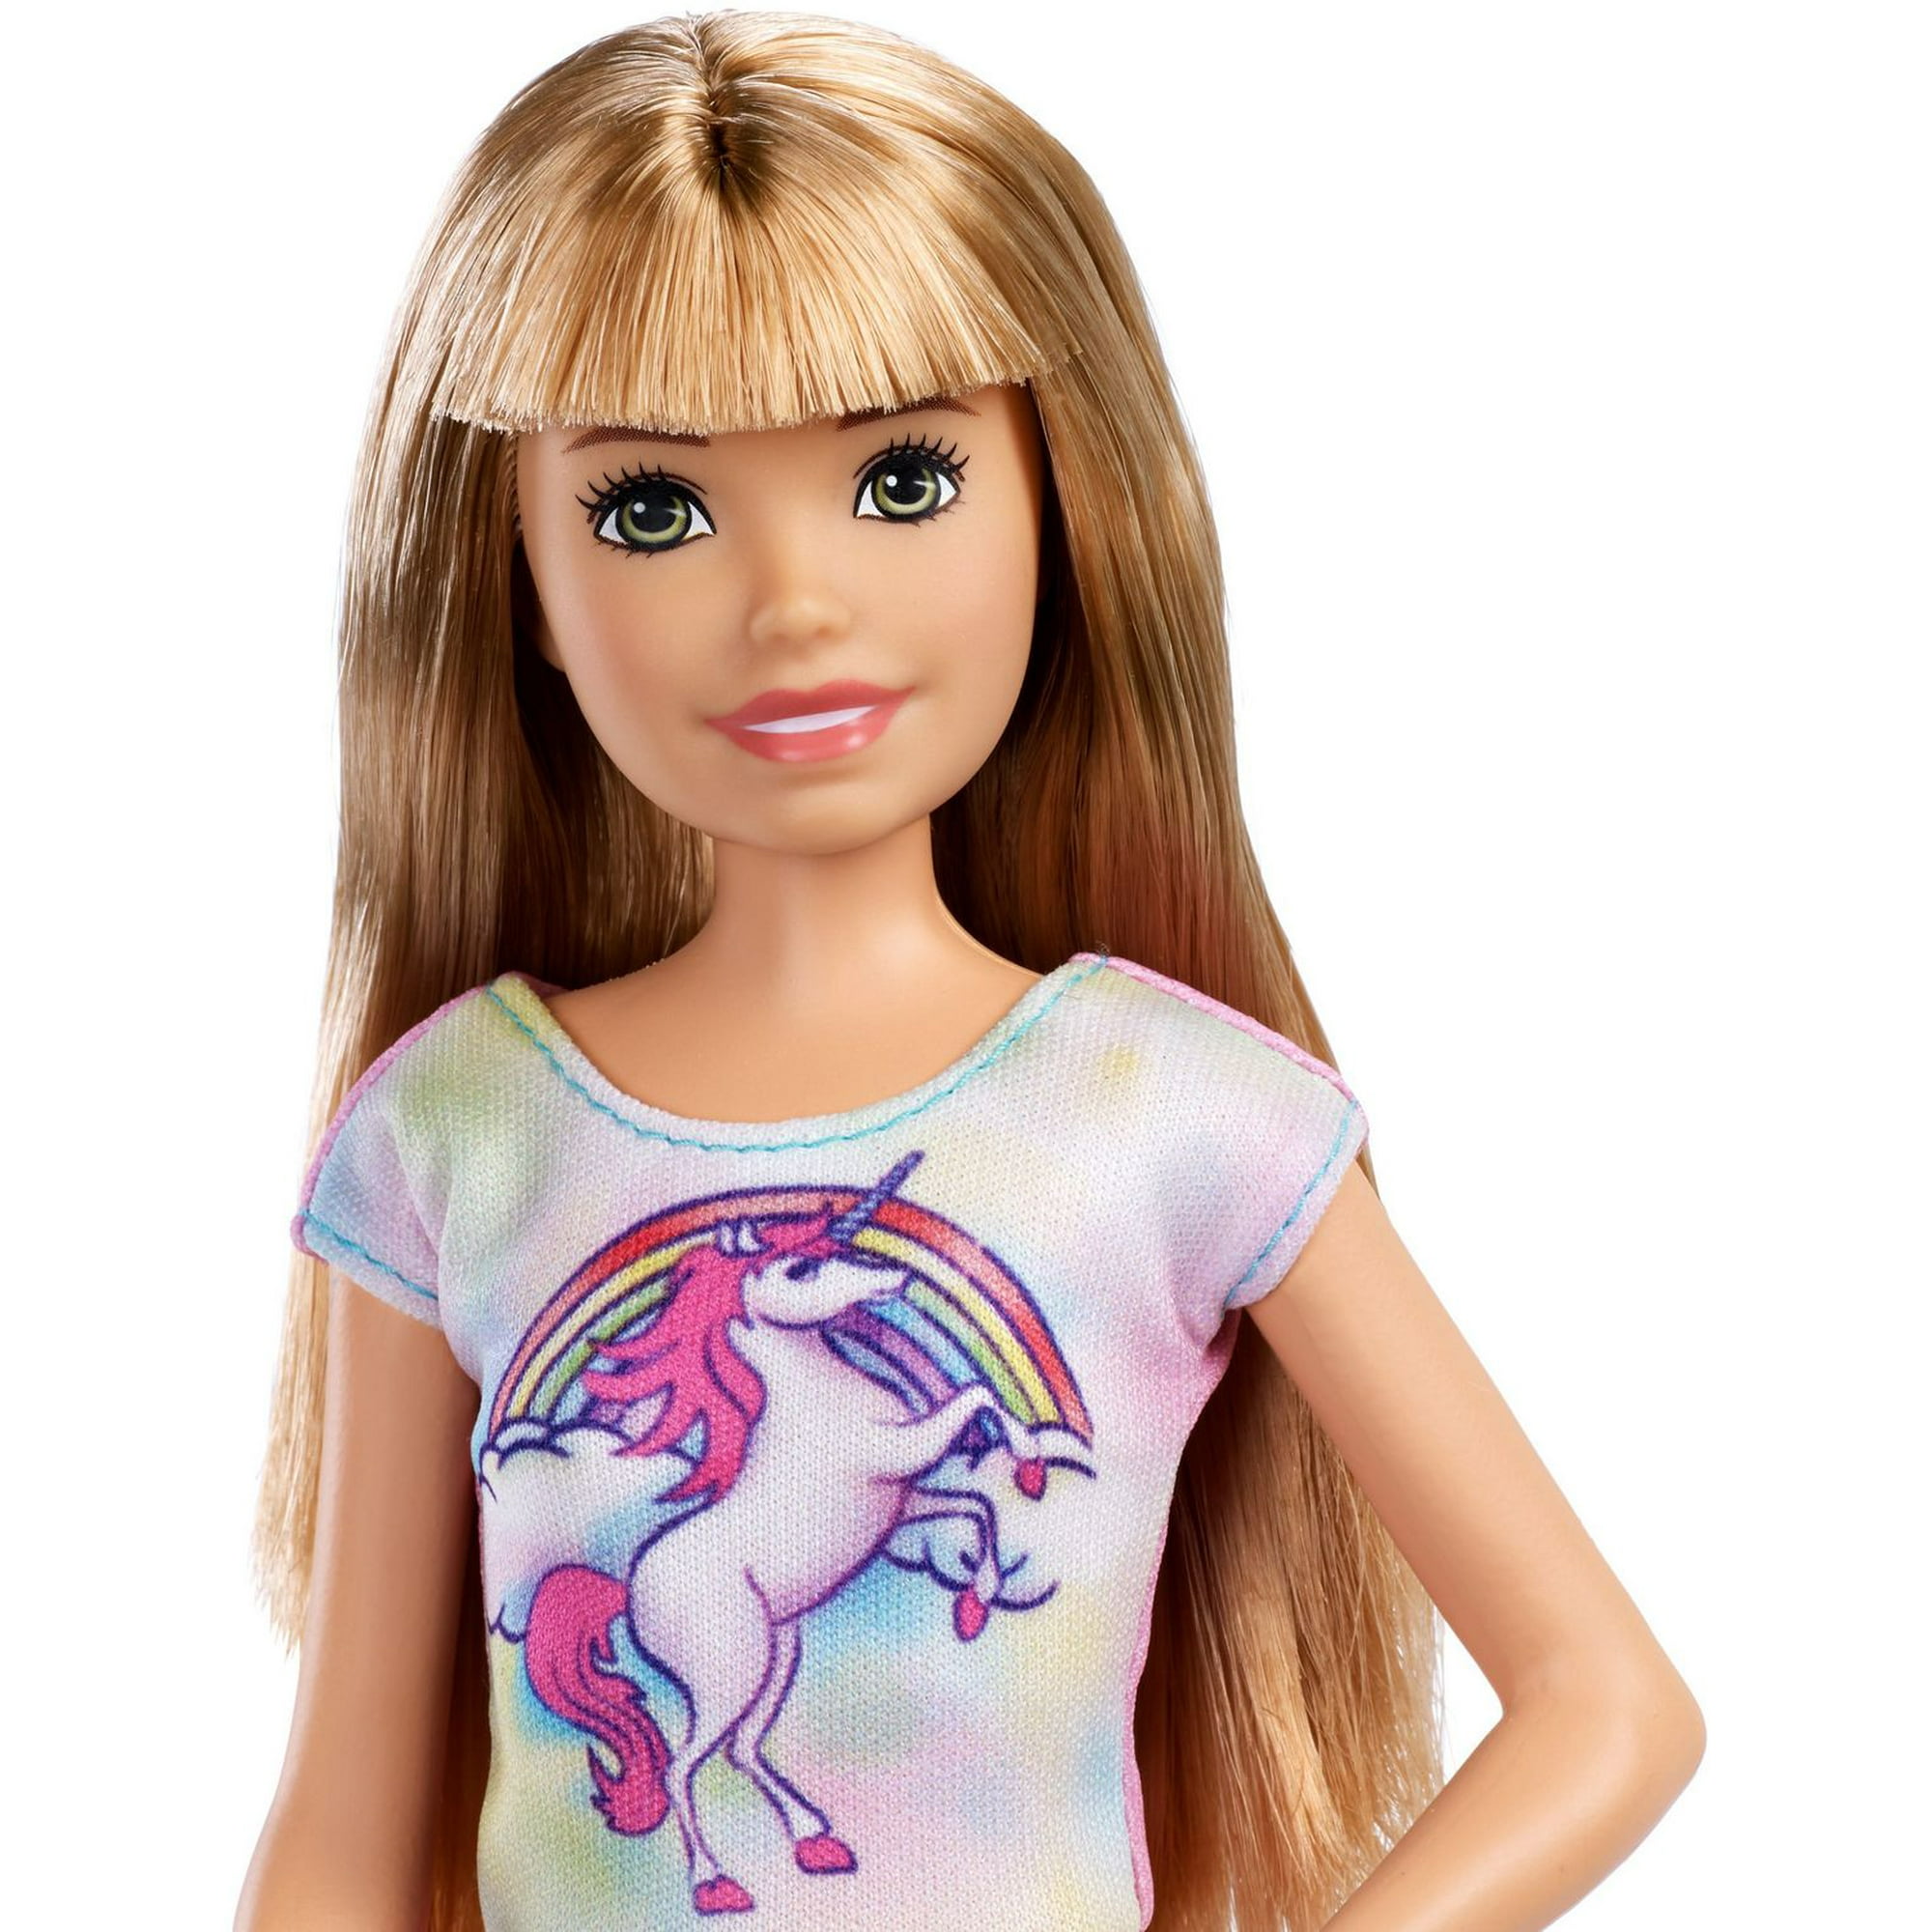 Barbie Skipper Babysitters Inc Doll & Accessories Set - Blonde